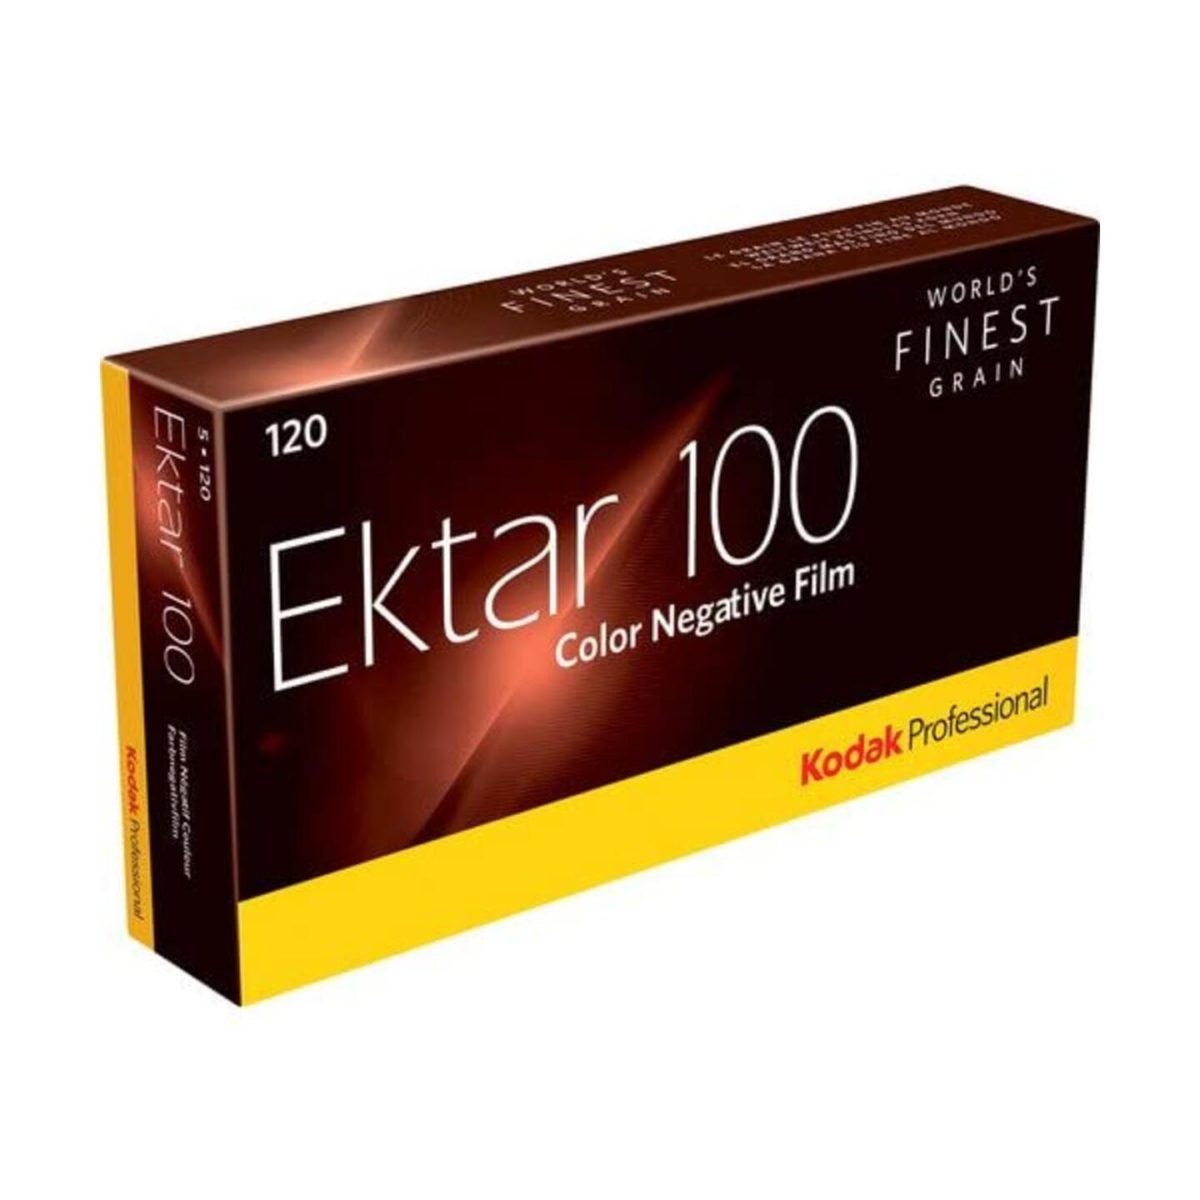 kodak_professional_ektar_100_5er_packung_120_01